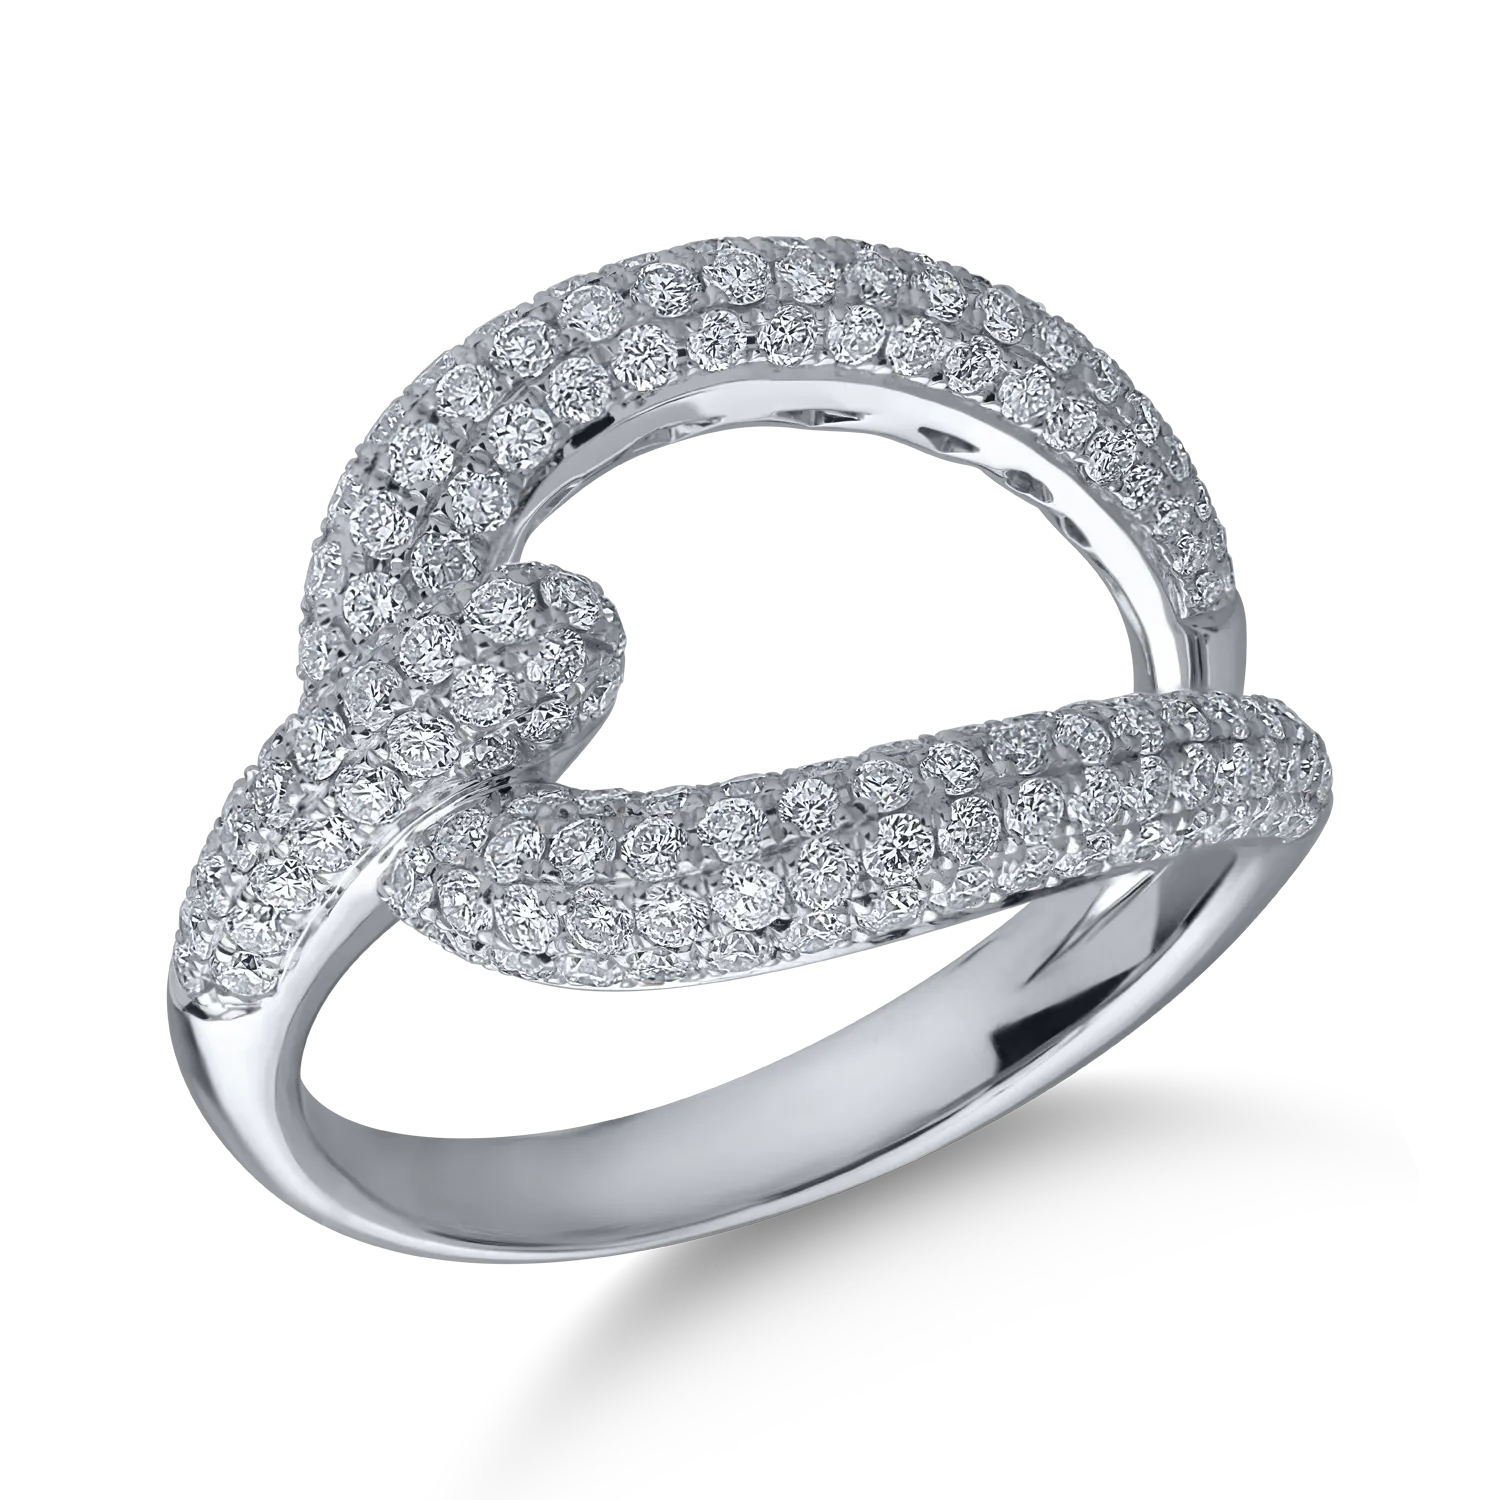 White gold geometric ring with 1.2ct diamonds